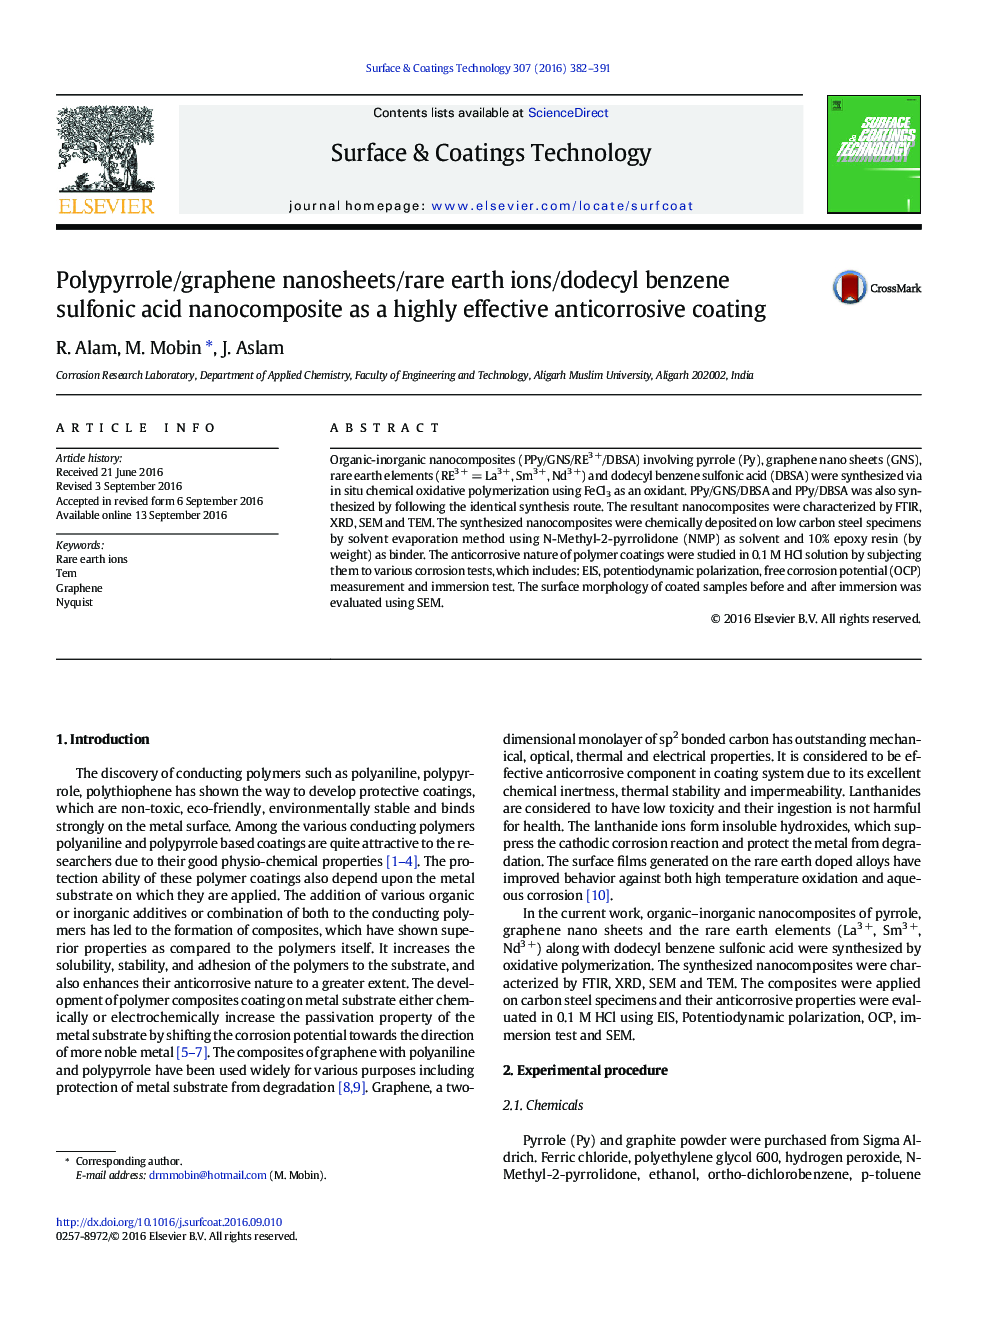 Polypyrrole/graphene nanosheets/rare earth ions/dodecyl benzene sulfonic acid nanocomposite as a highly effective anticorrosive coating